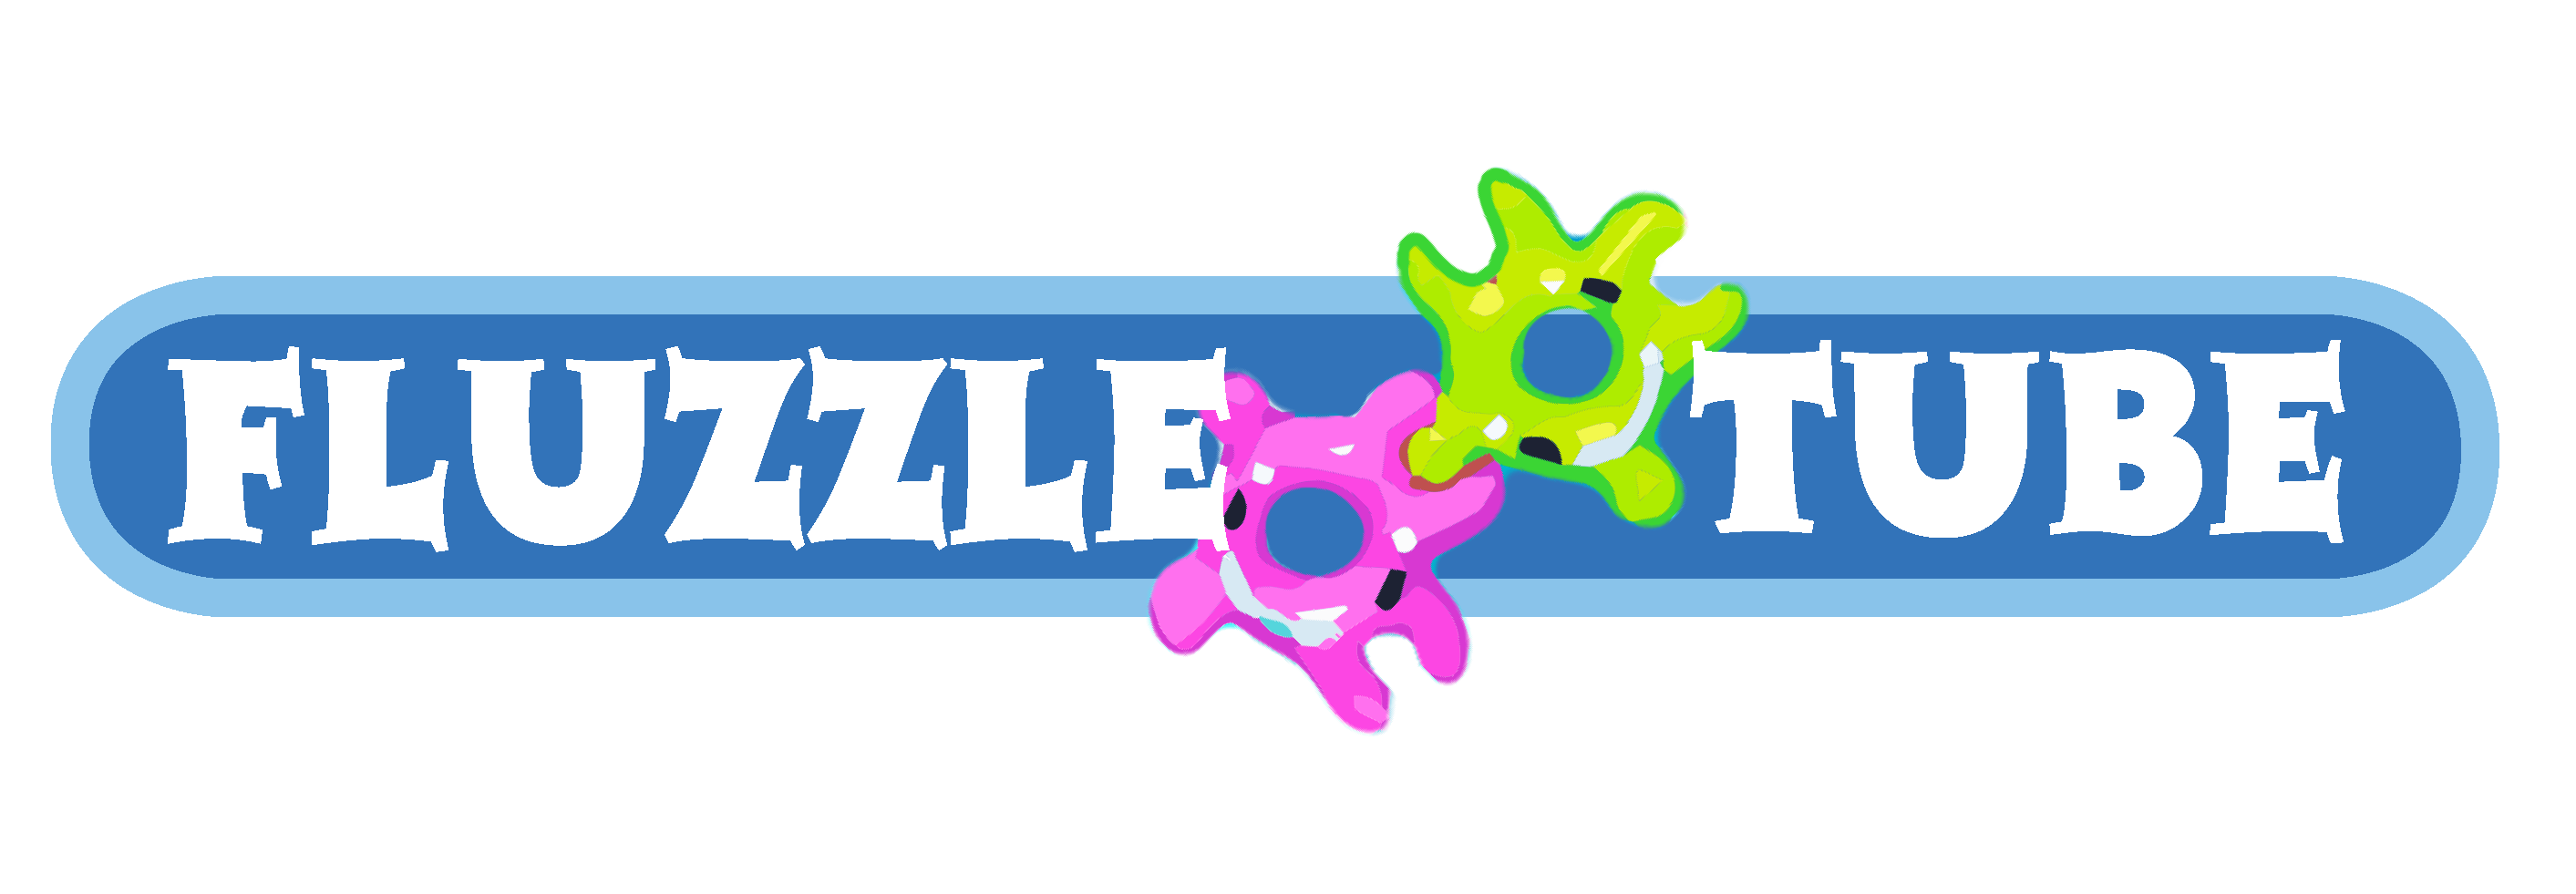 Fluzzle Tube coupons logo